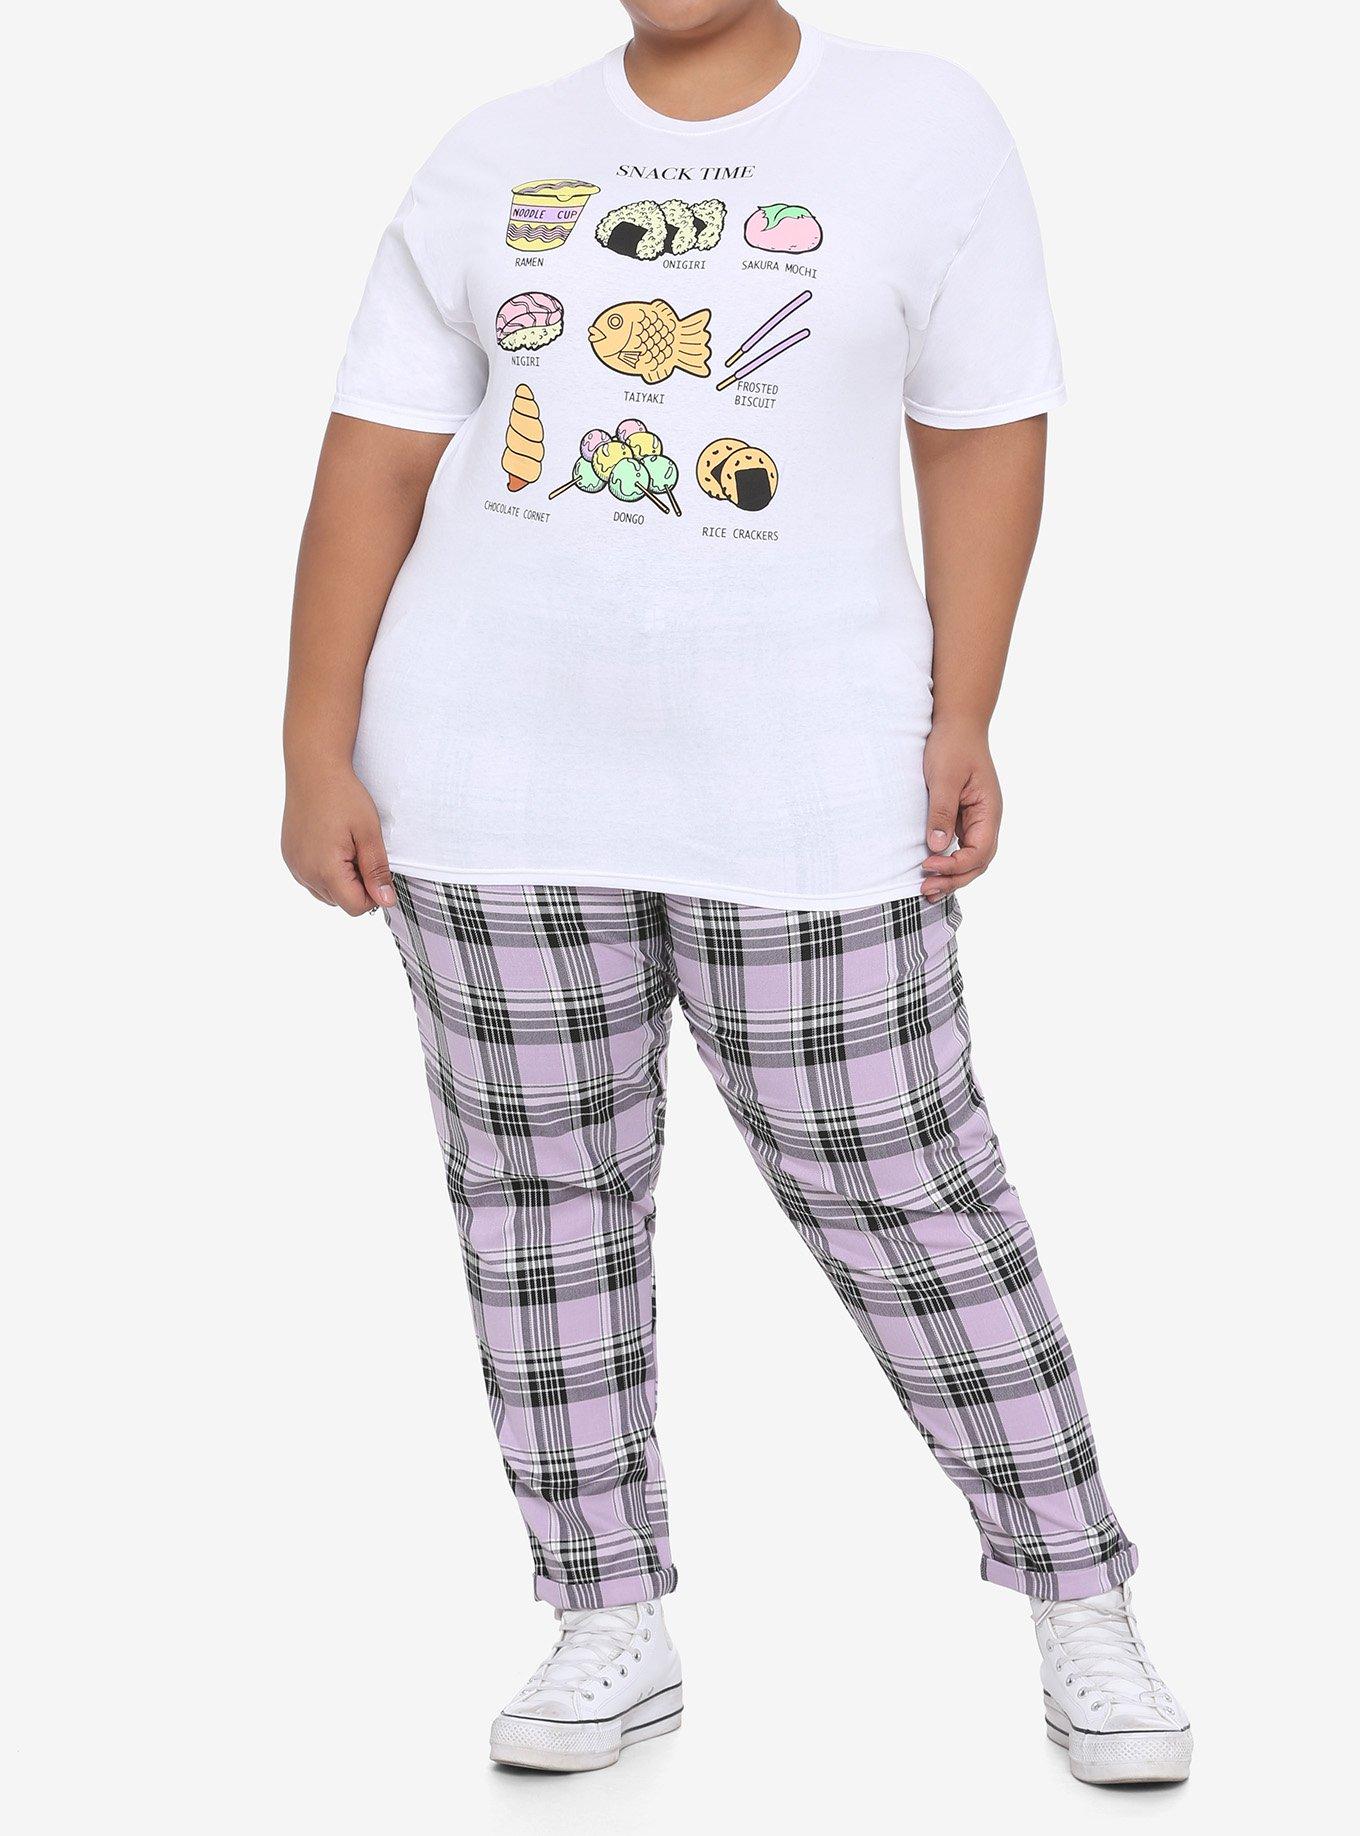 Kawaii Snack Time Boyfriend Fit Girls T-Shirt Plus Size, MULTI, alternate